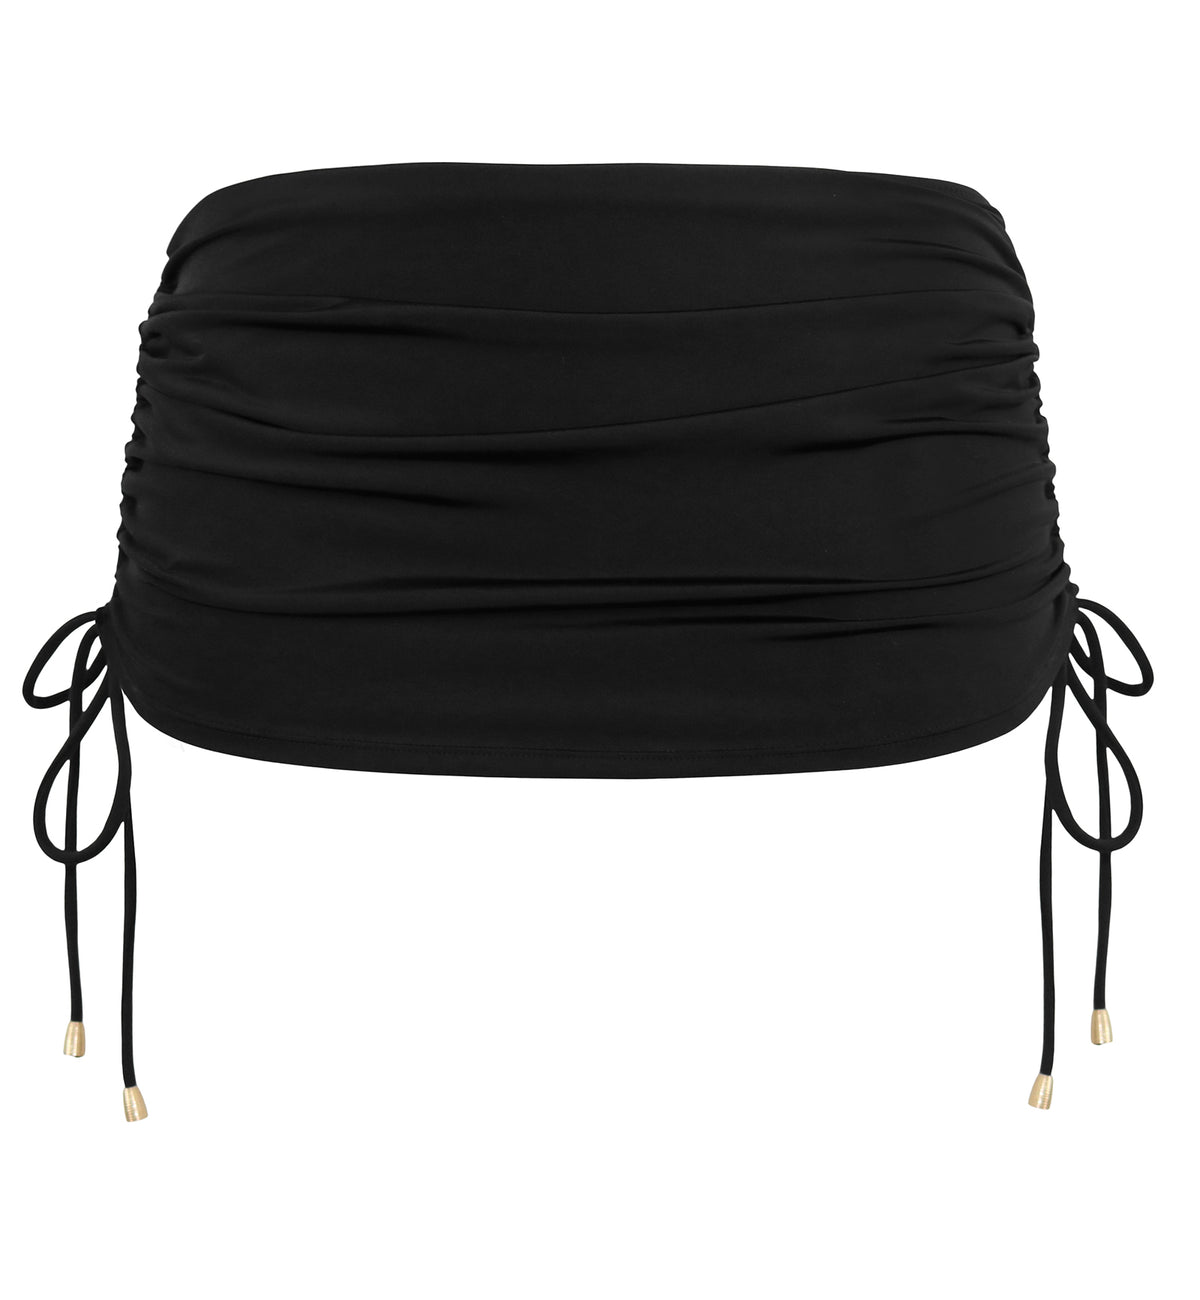 Pour Moi Santa Cruz Adjustable Skirt Swim Brief (24904),Small,Black - Black,Small